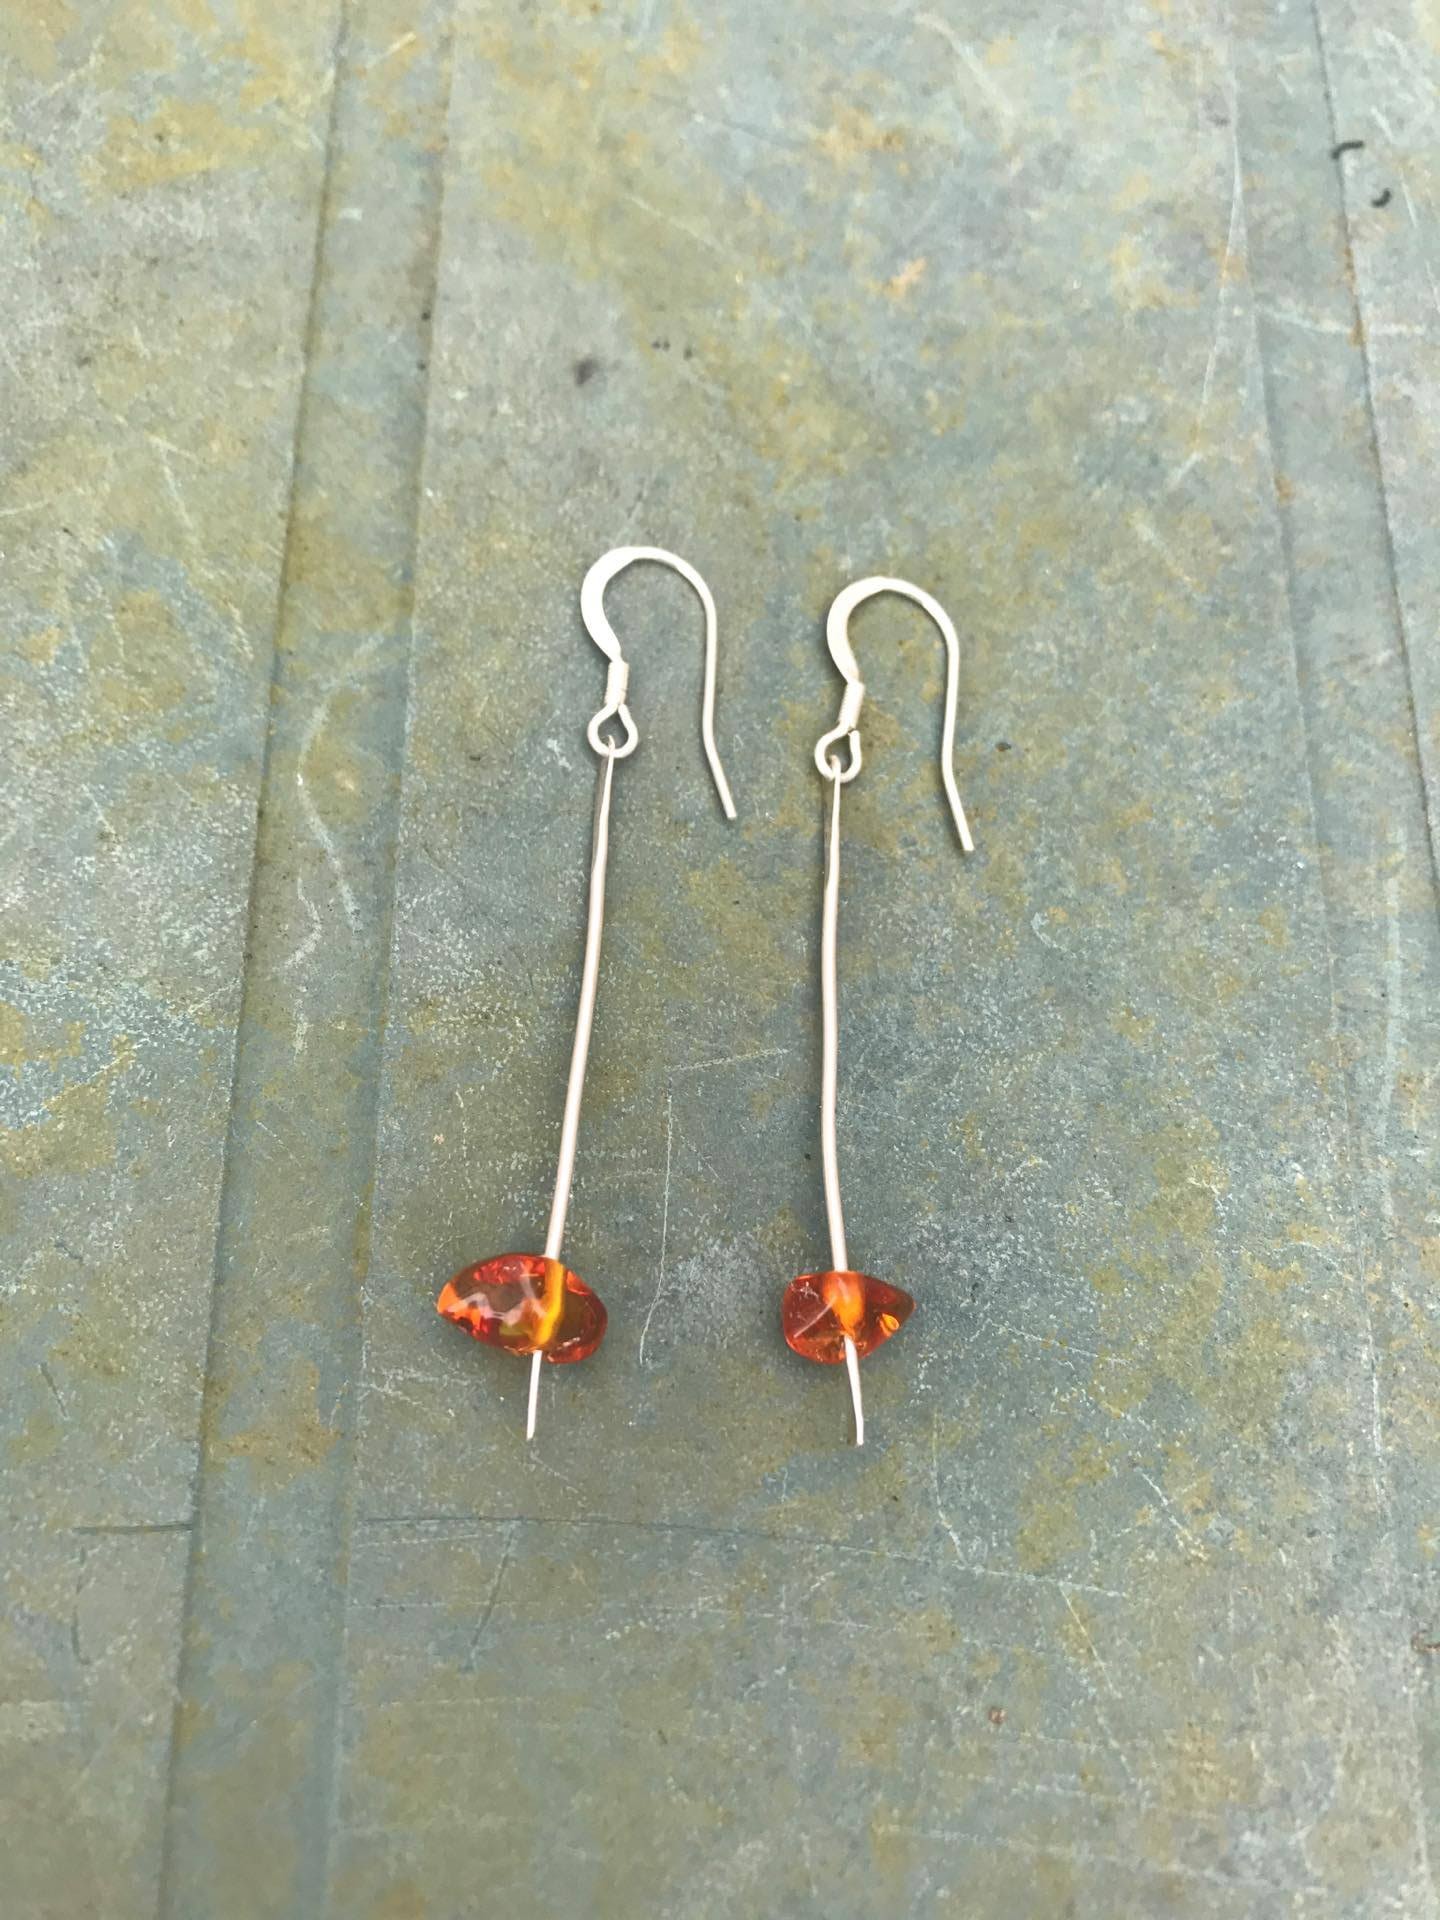 Earrings - E10 - Silver and amber dangly earrings